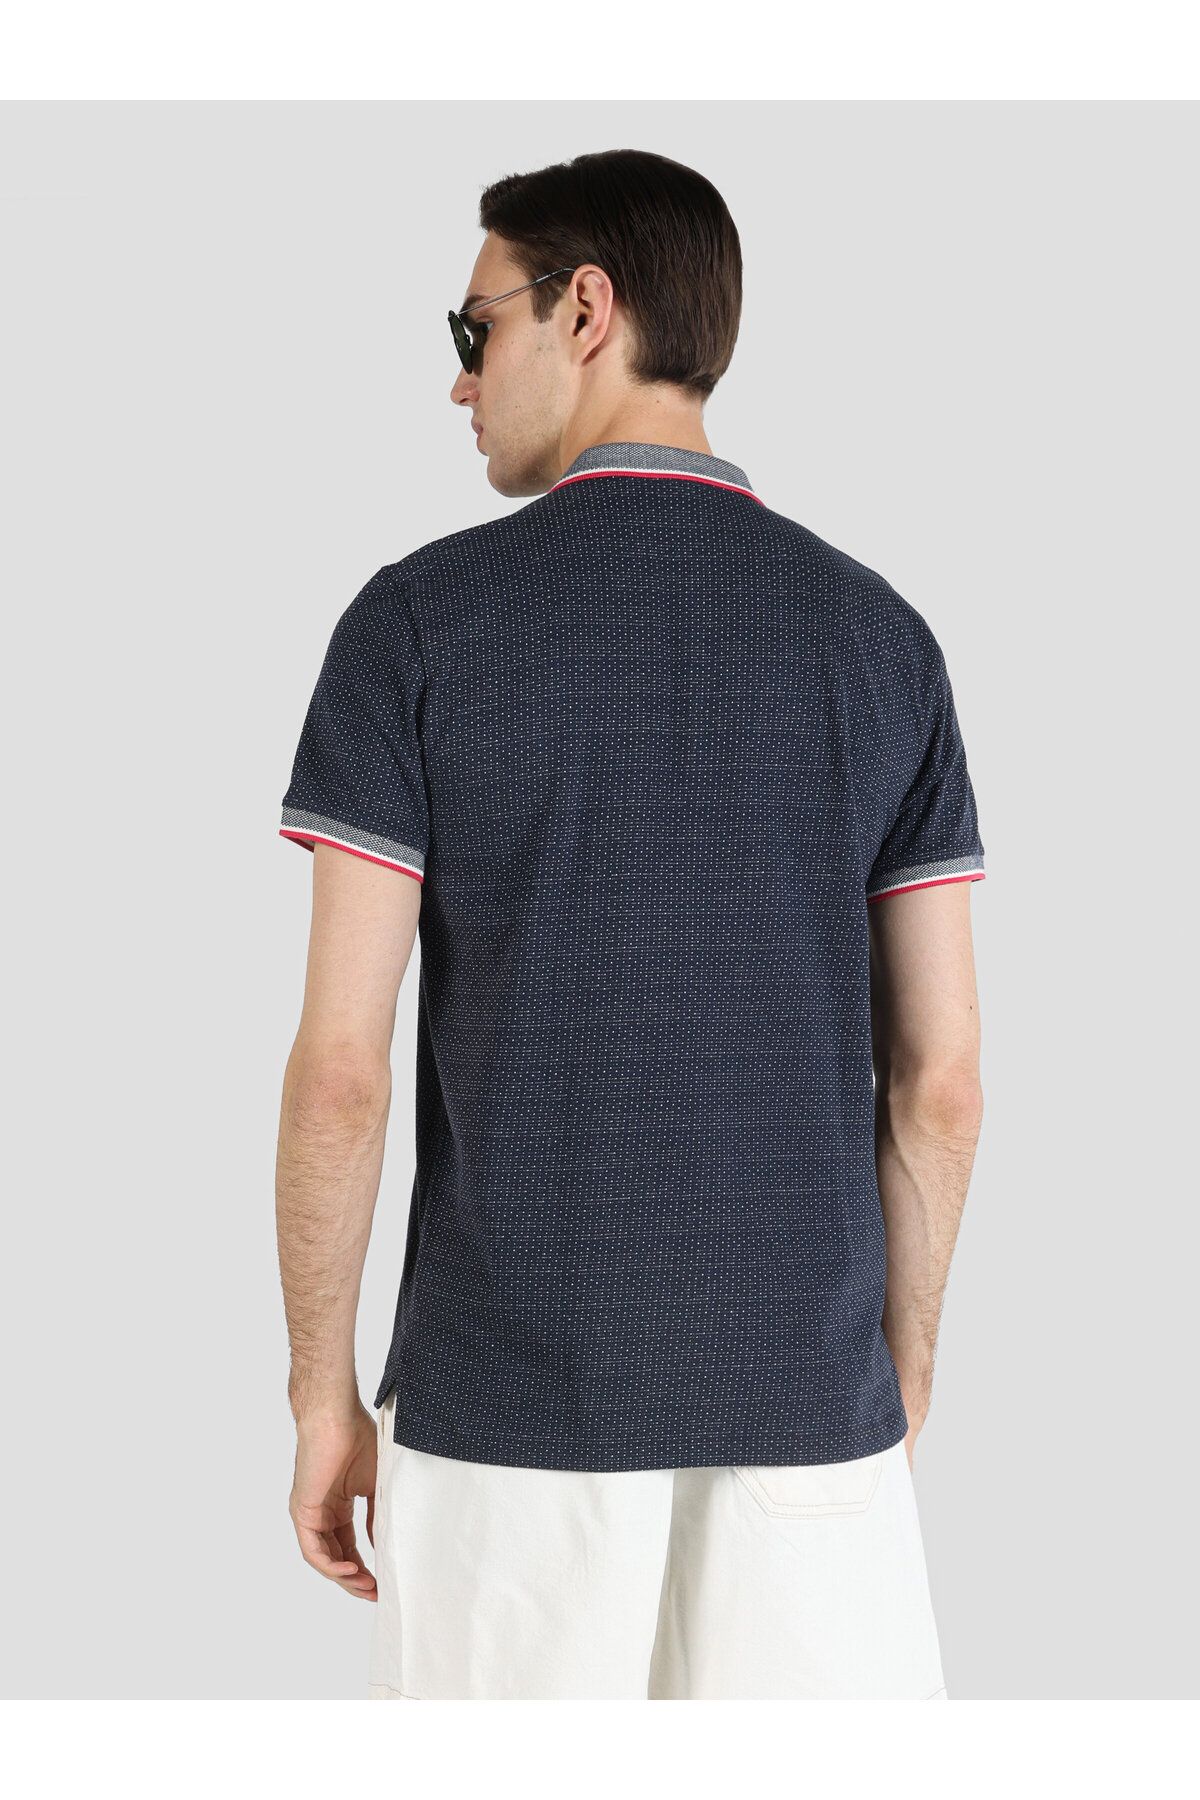 Colin’s تی شرت آستین کوتاه یقه پولو مردانه راه آبی سرمه ای با تناسب معمولی